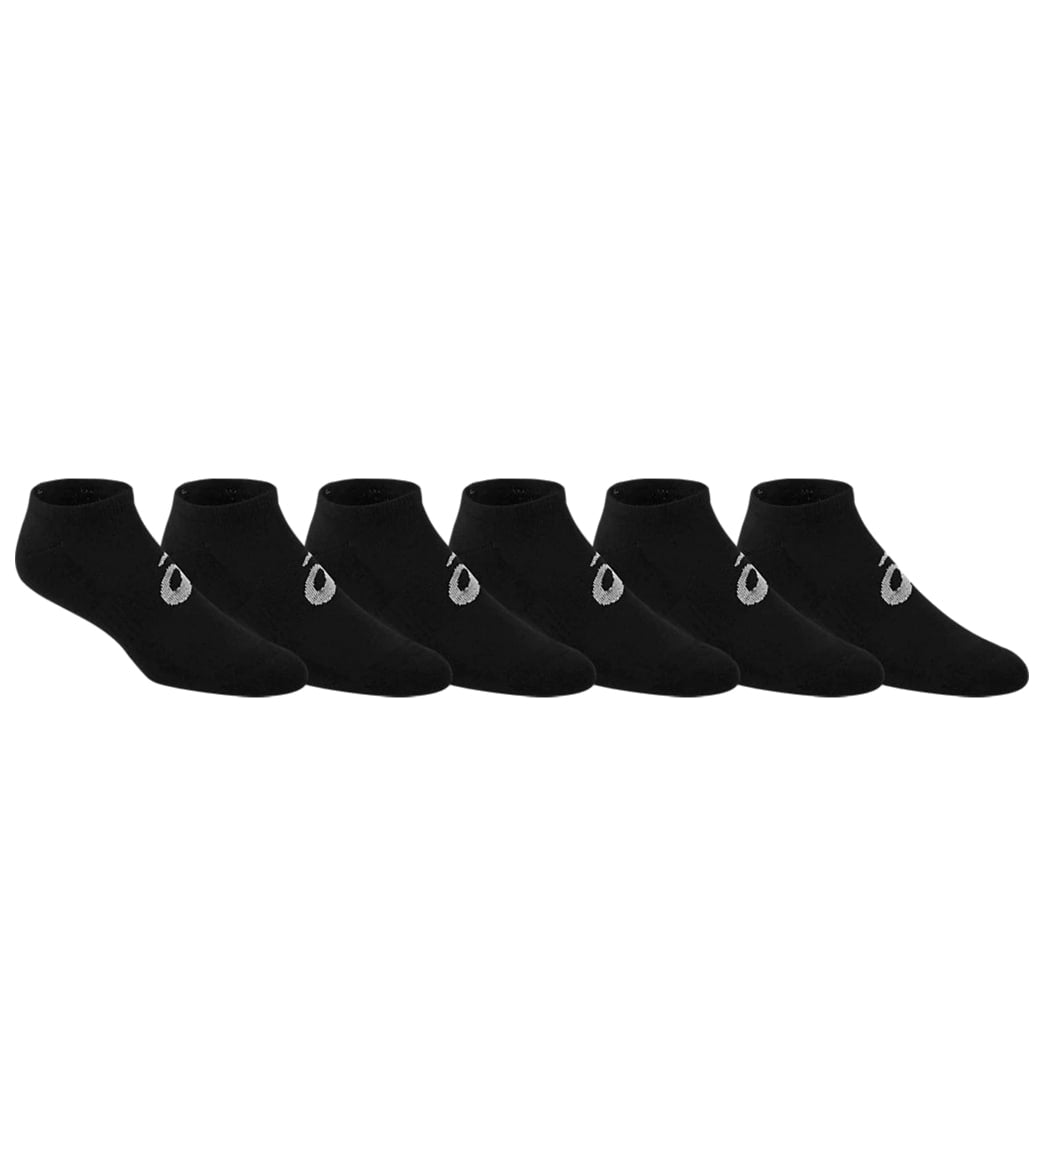 Asics Men's Invasion No Show Sock 6 Pack - Black Small Size Small - Swimoutlet.com